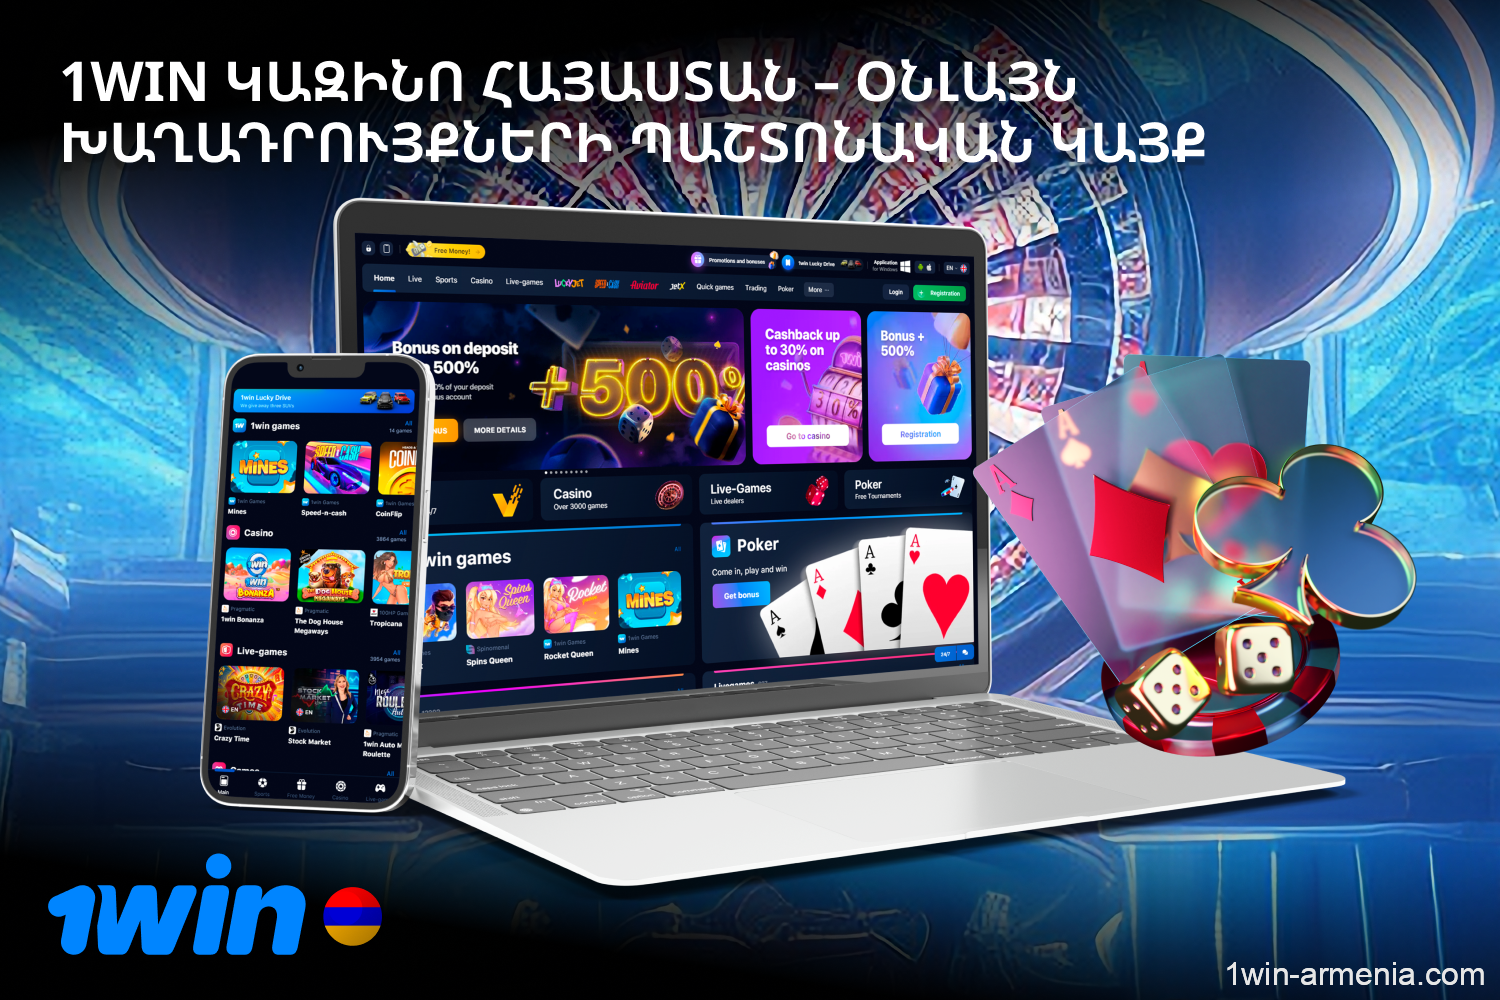 1win Կազինո Հայաստան առաջարկում է սպորտային խաղադրույքների լայն ընտրանի և կազինո խաղերի մեծ հավաքածո